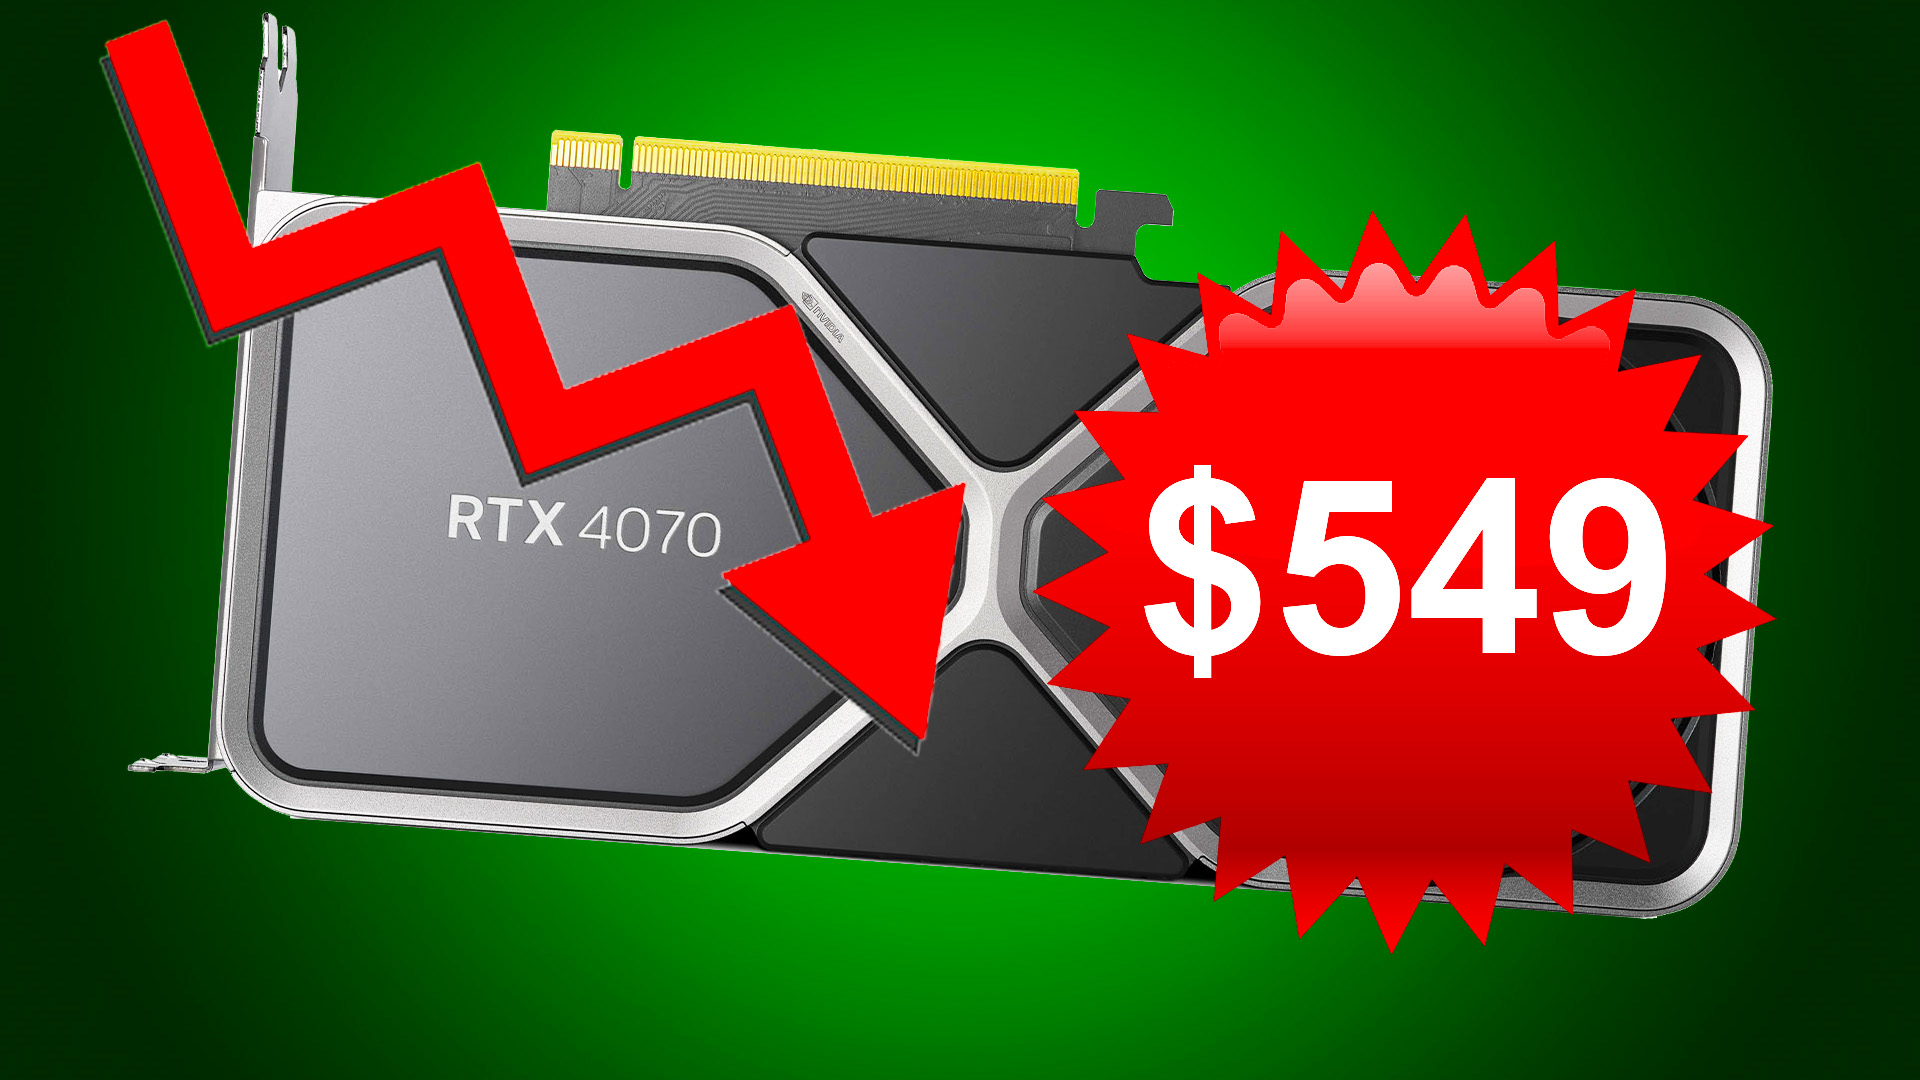 nvidia-geforce-rtx-4070-price-crashes-to-549-custom-pc